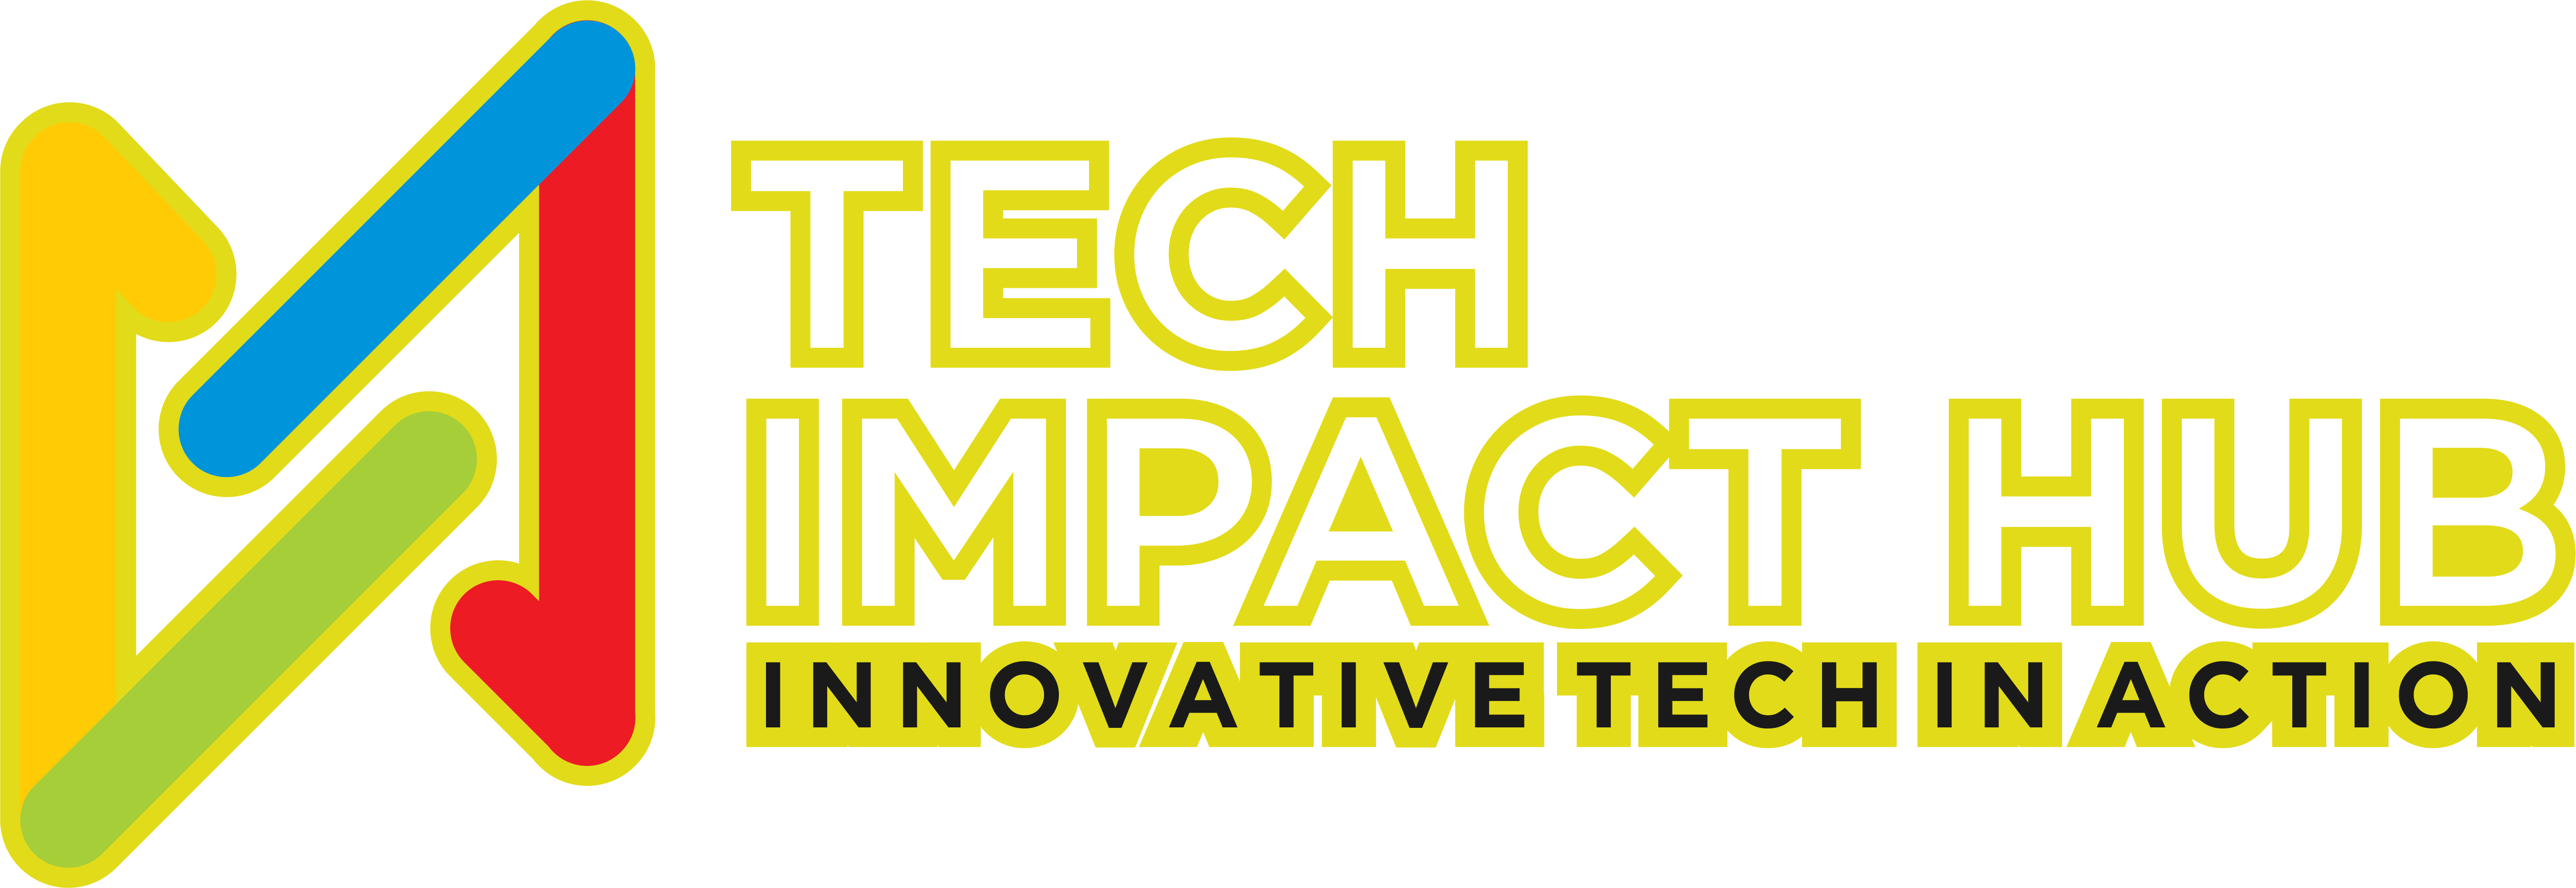 Tech Impact Hub